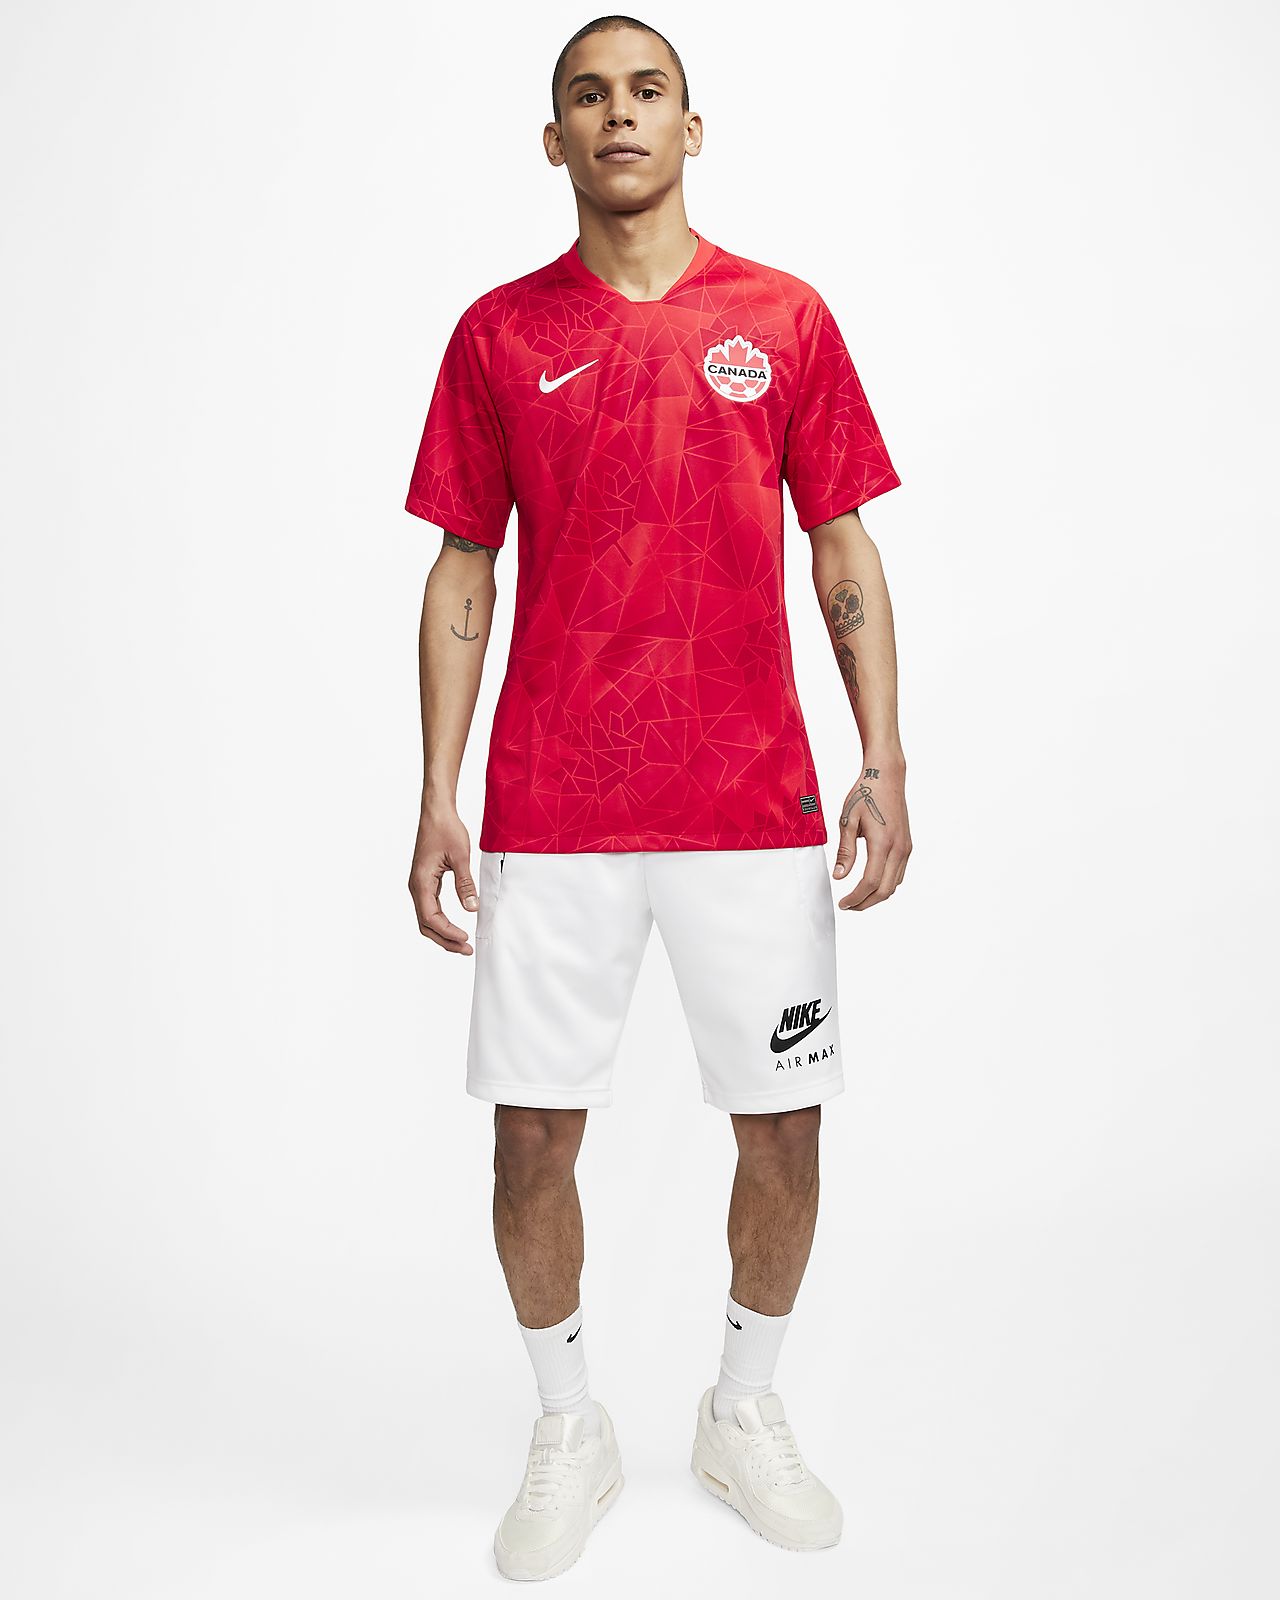 Canada 2020 Nike Home Shirt | 20/21 Kits | Football shirt blog